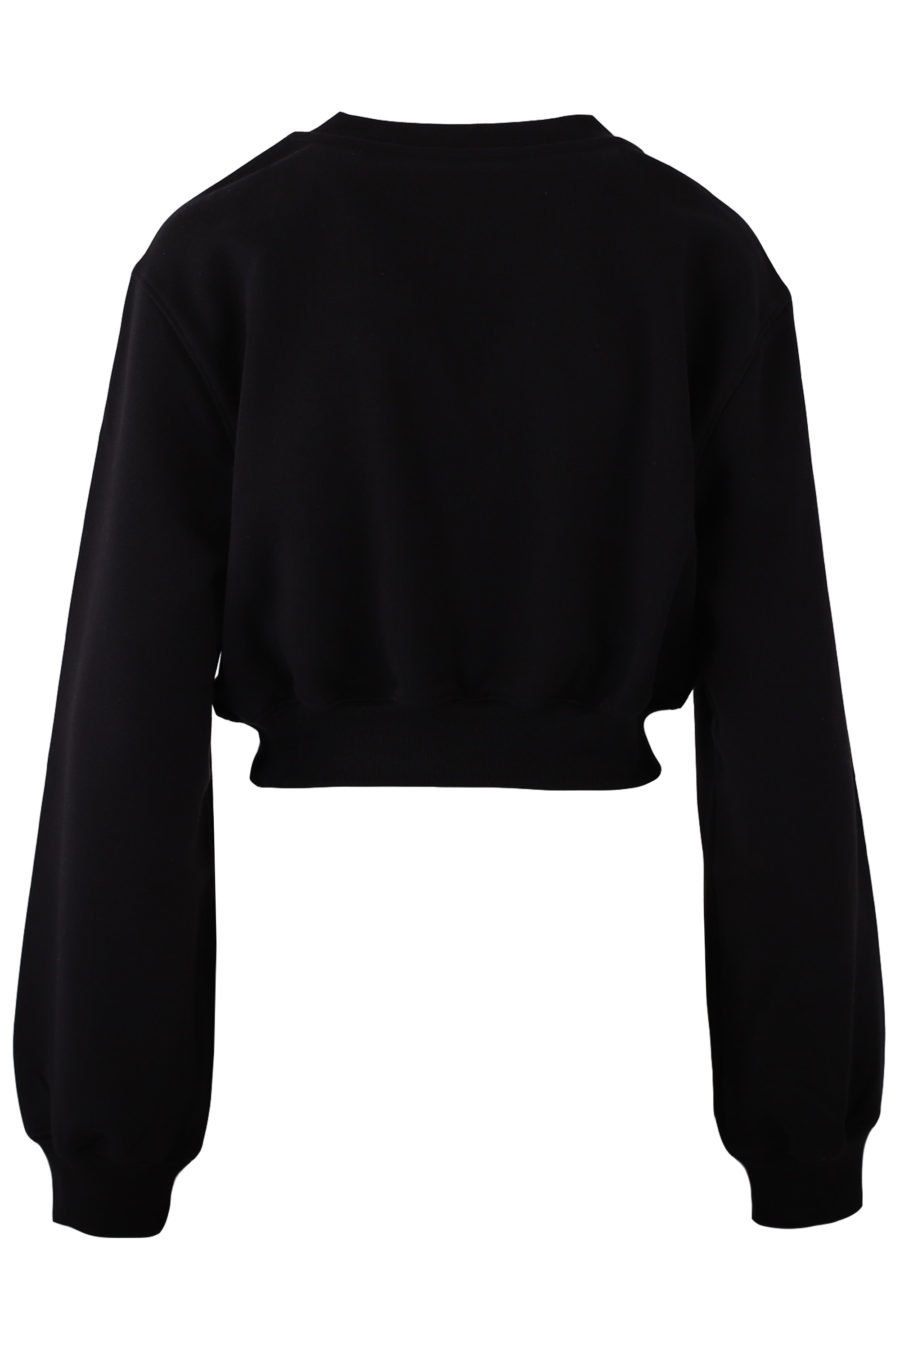 Black sweatshirt with shiny logo - 4bbfd28cdf6262626ae26bdae0477953577ae6f4c7